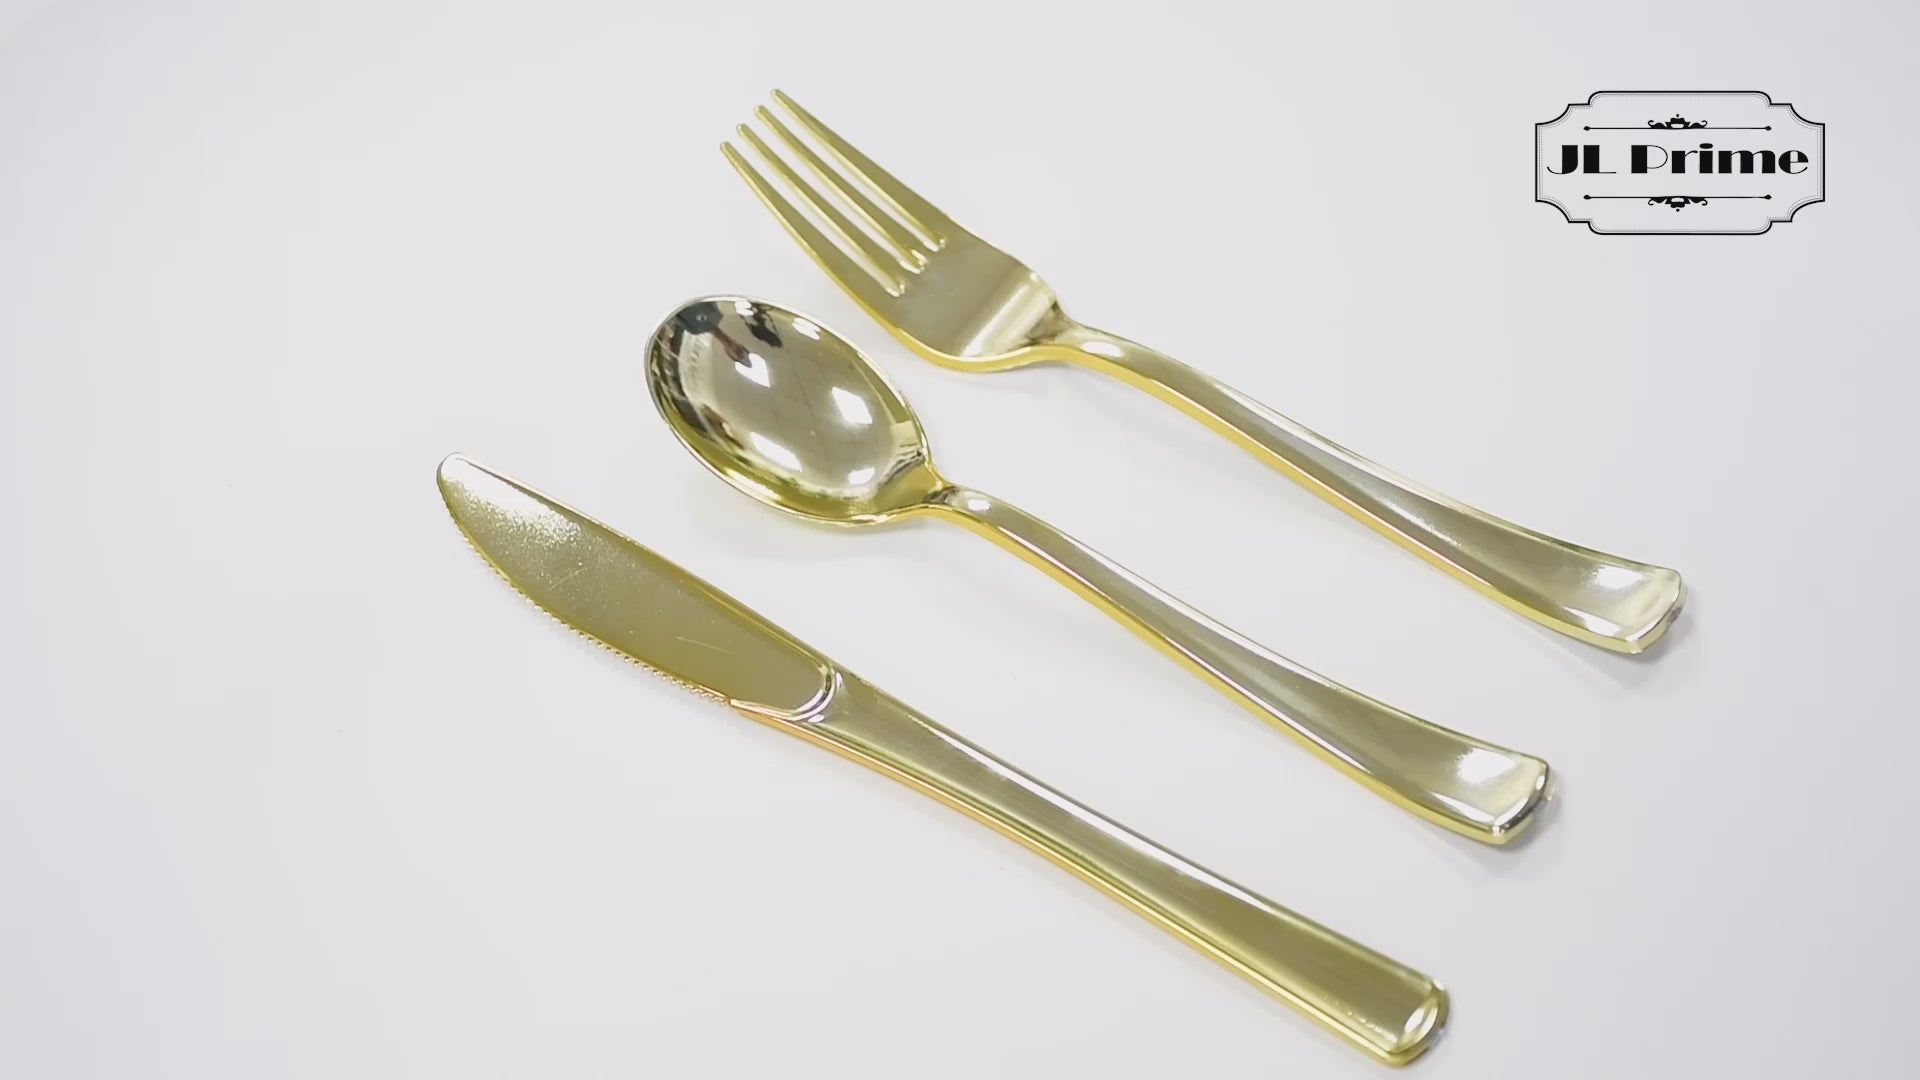 JL Prime 300 Gold Plastic Silverware Set, Gold Plastic Cutlery Set